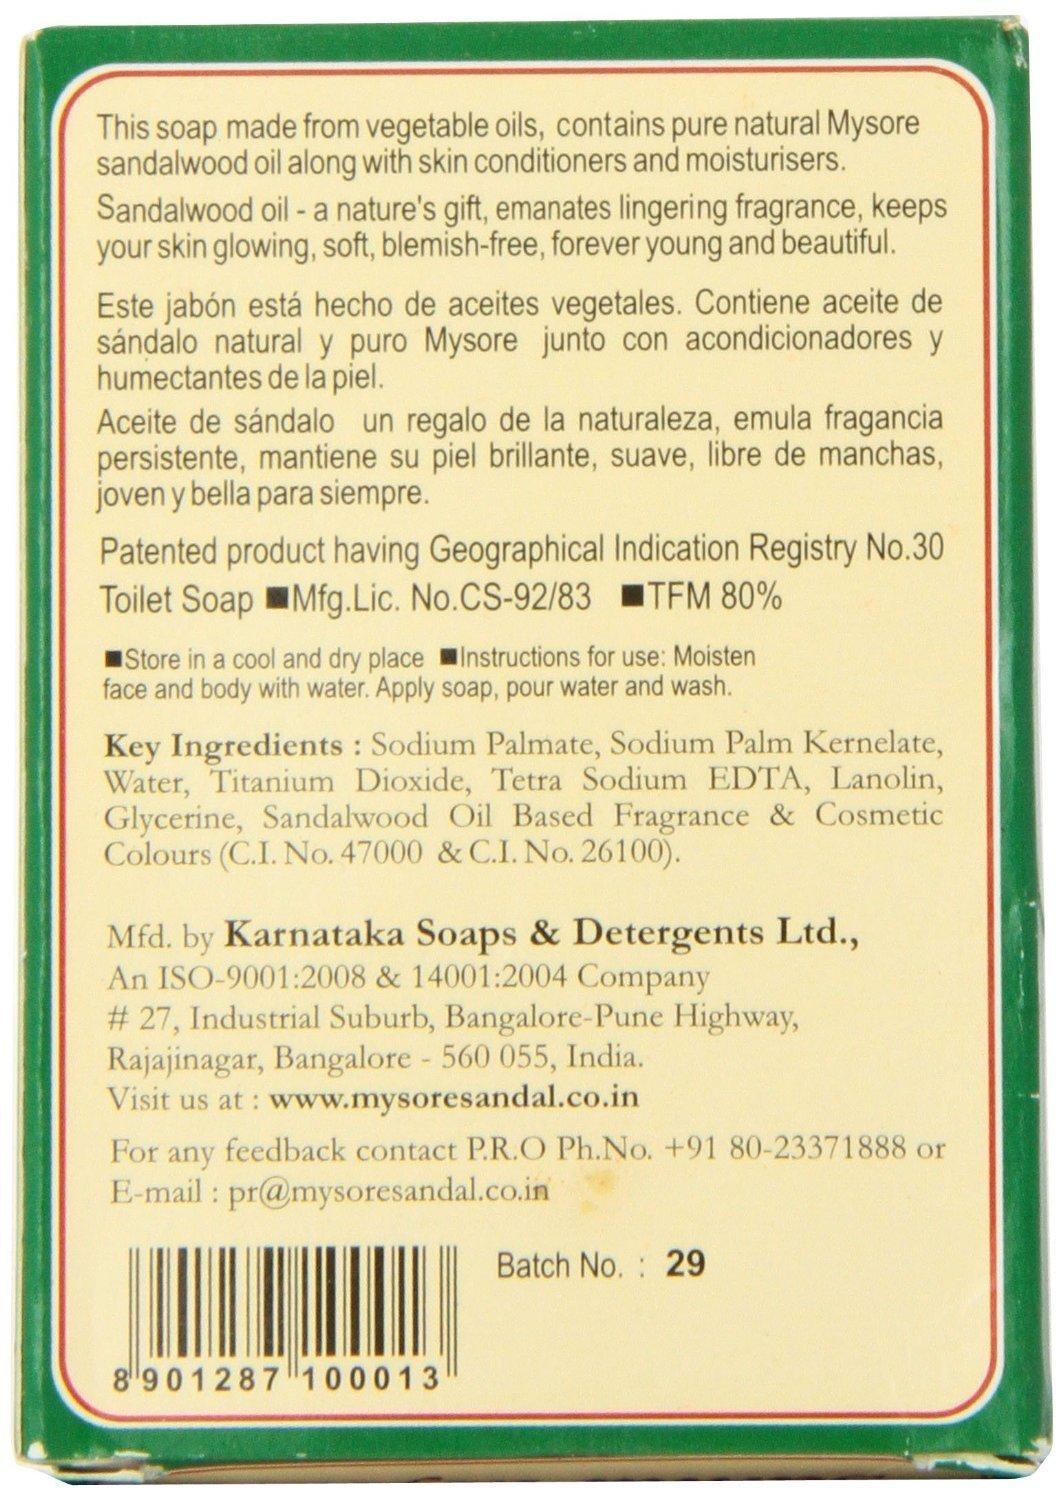 Buy Mysore Sandal Bathing Soap 75 Gm Carton Online At Best Price of Rs 42 -  bigbasket